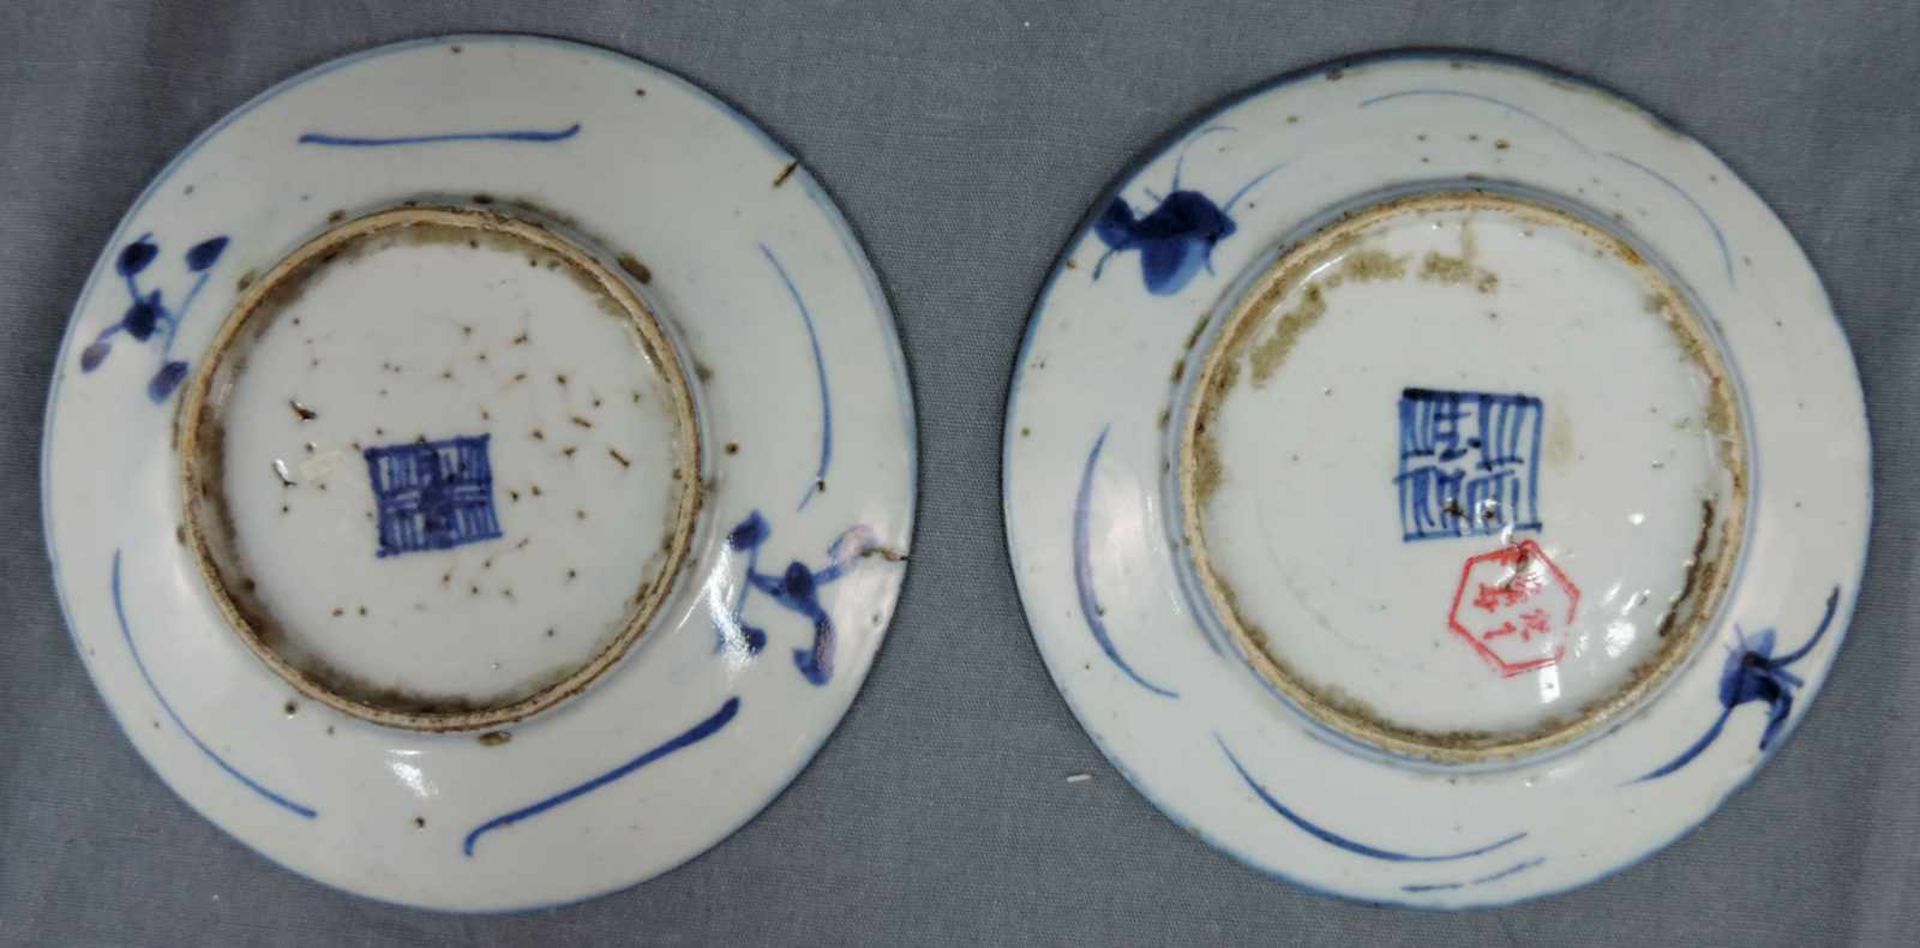 2 Teller China. Blau - Weiß Porzellan, Qing Dynastie. Durchmesser bis 14 cm. 2 plates, China. Blue - - Image 3 of 3